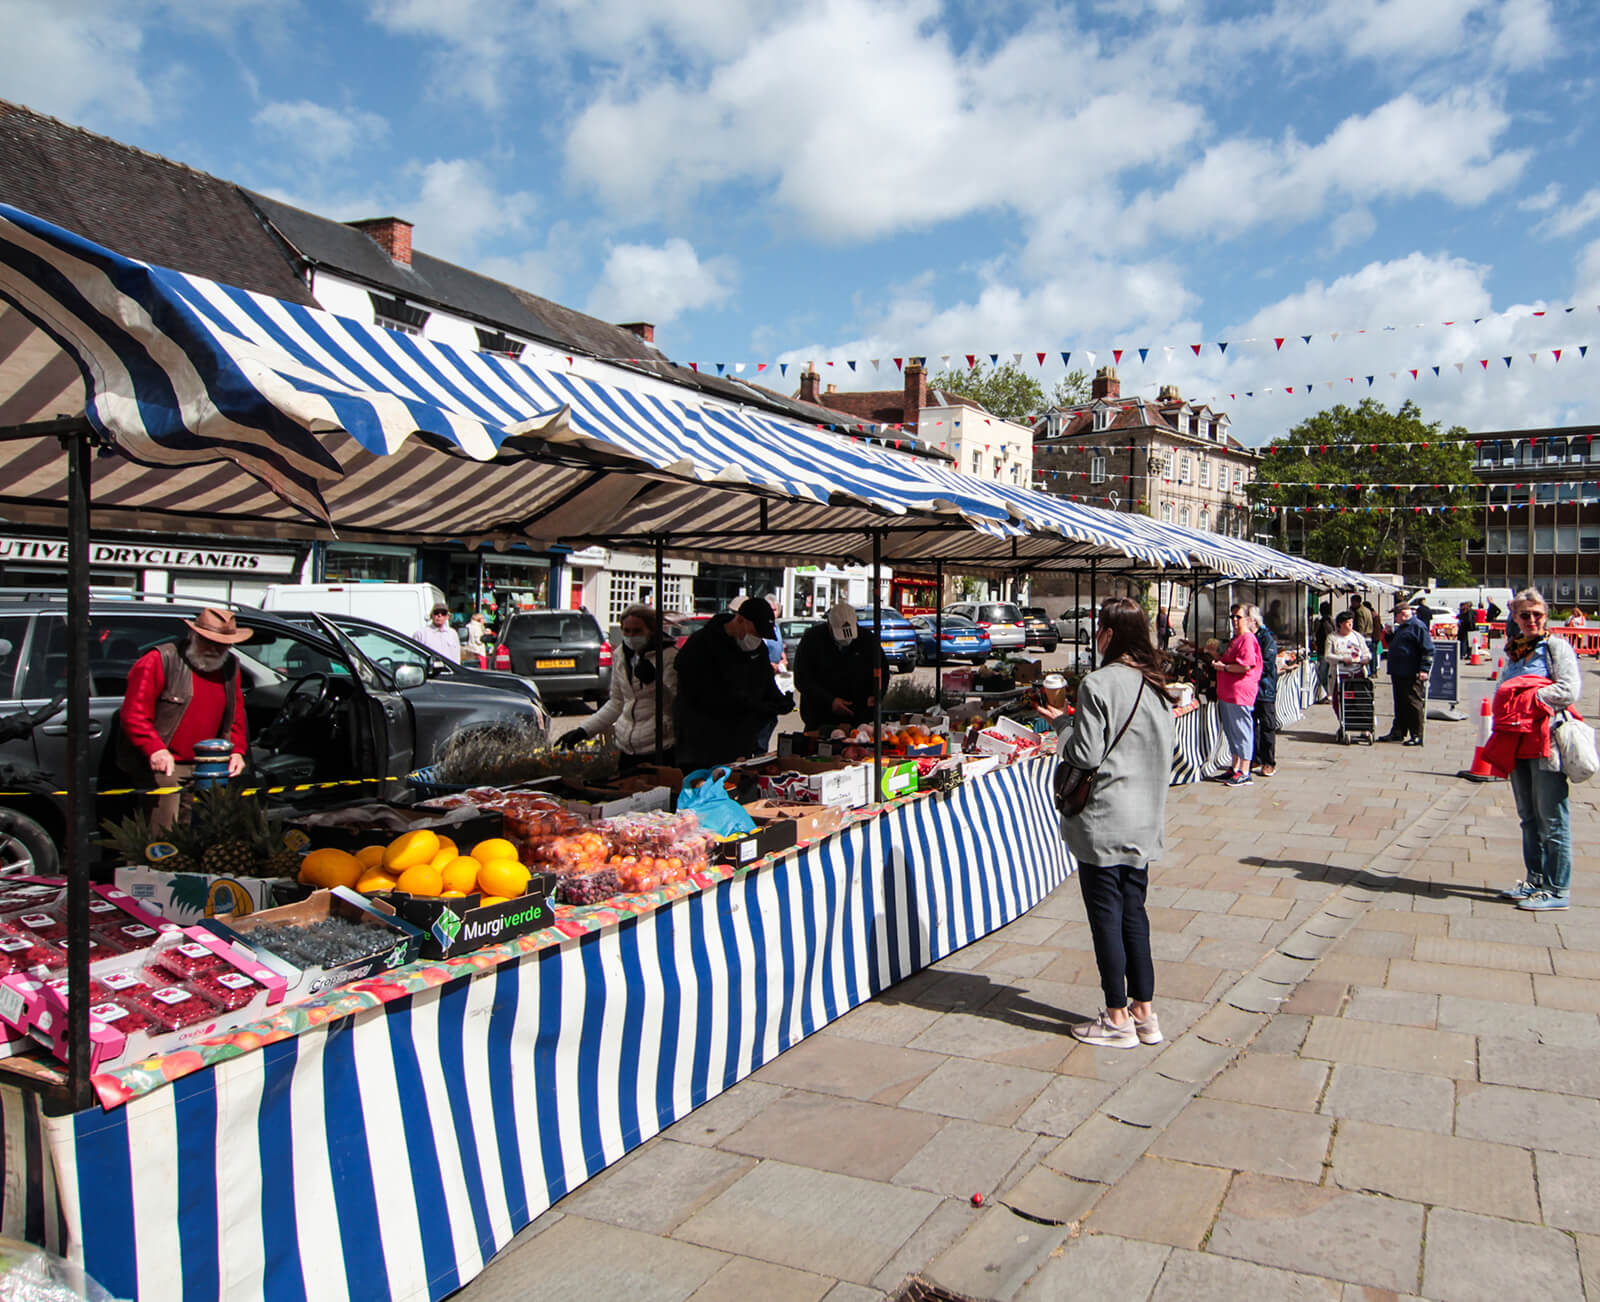 Market Stall Hire Cjs Events Warwickshire